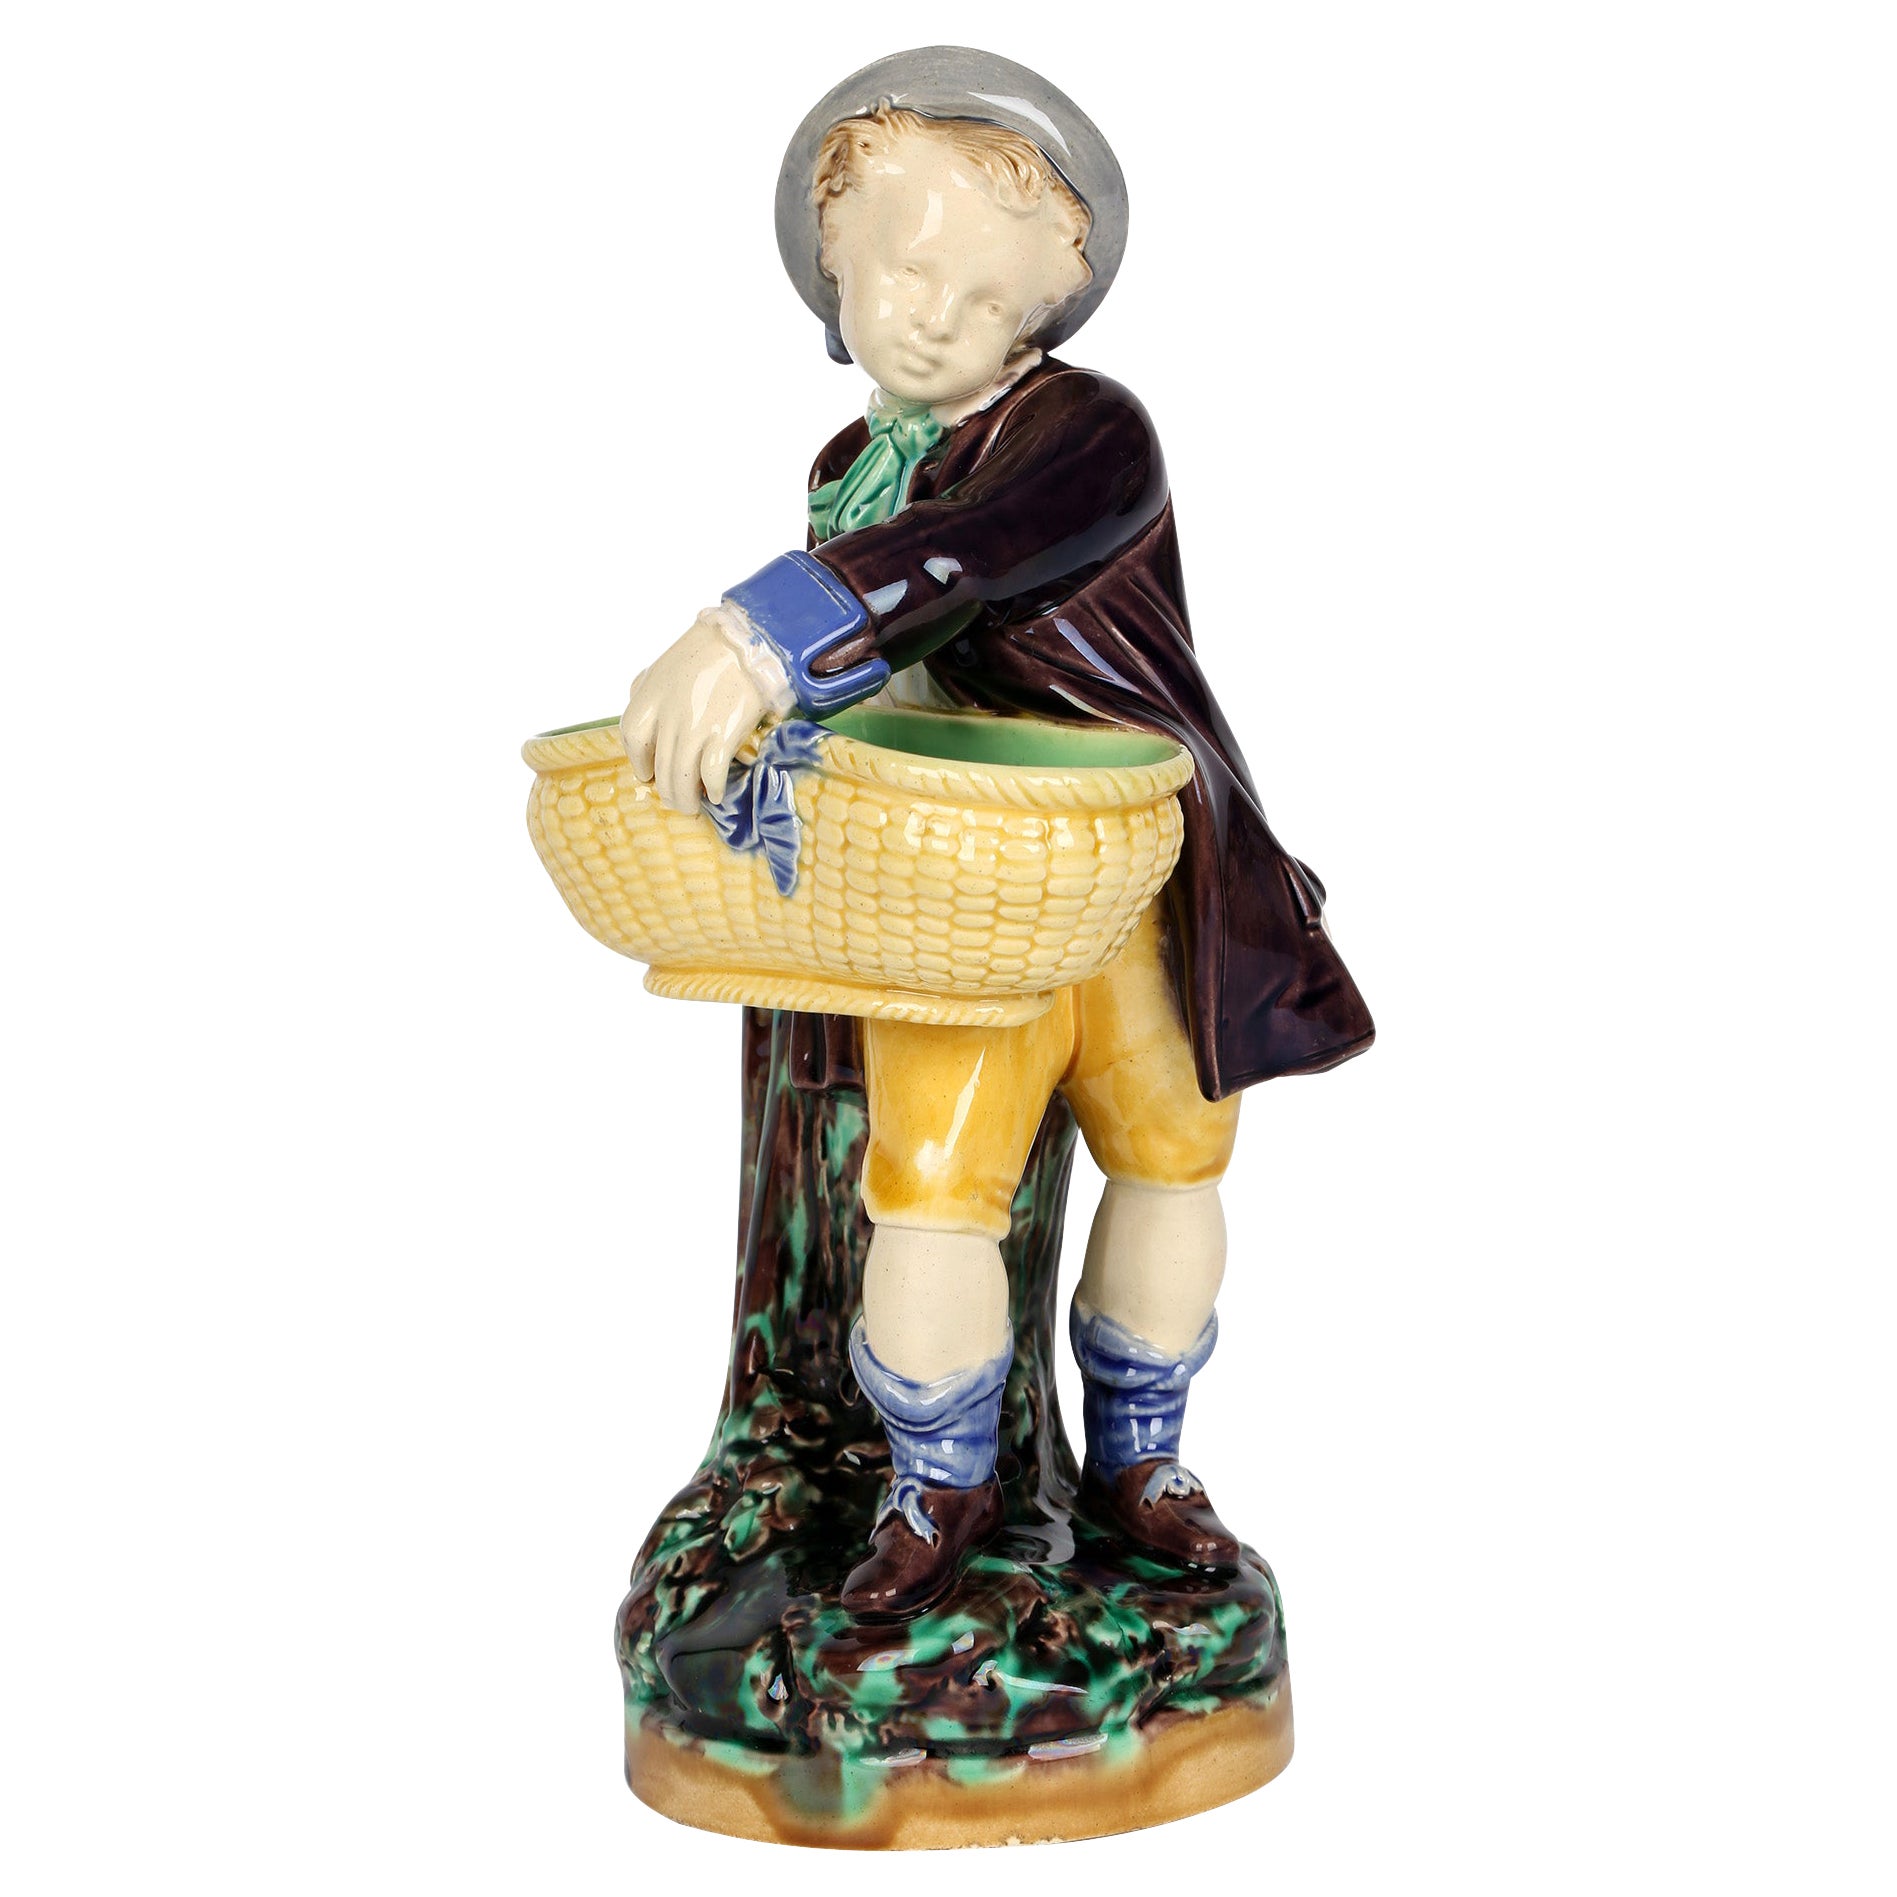 Minton Majolica Pottery Boy Holding a Basket Probably for Salt